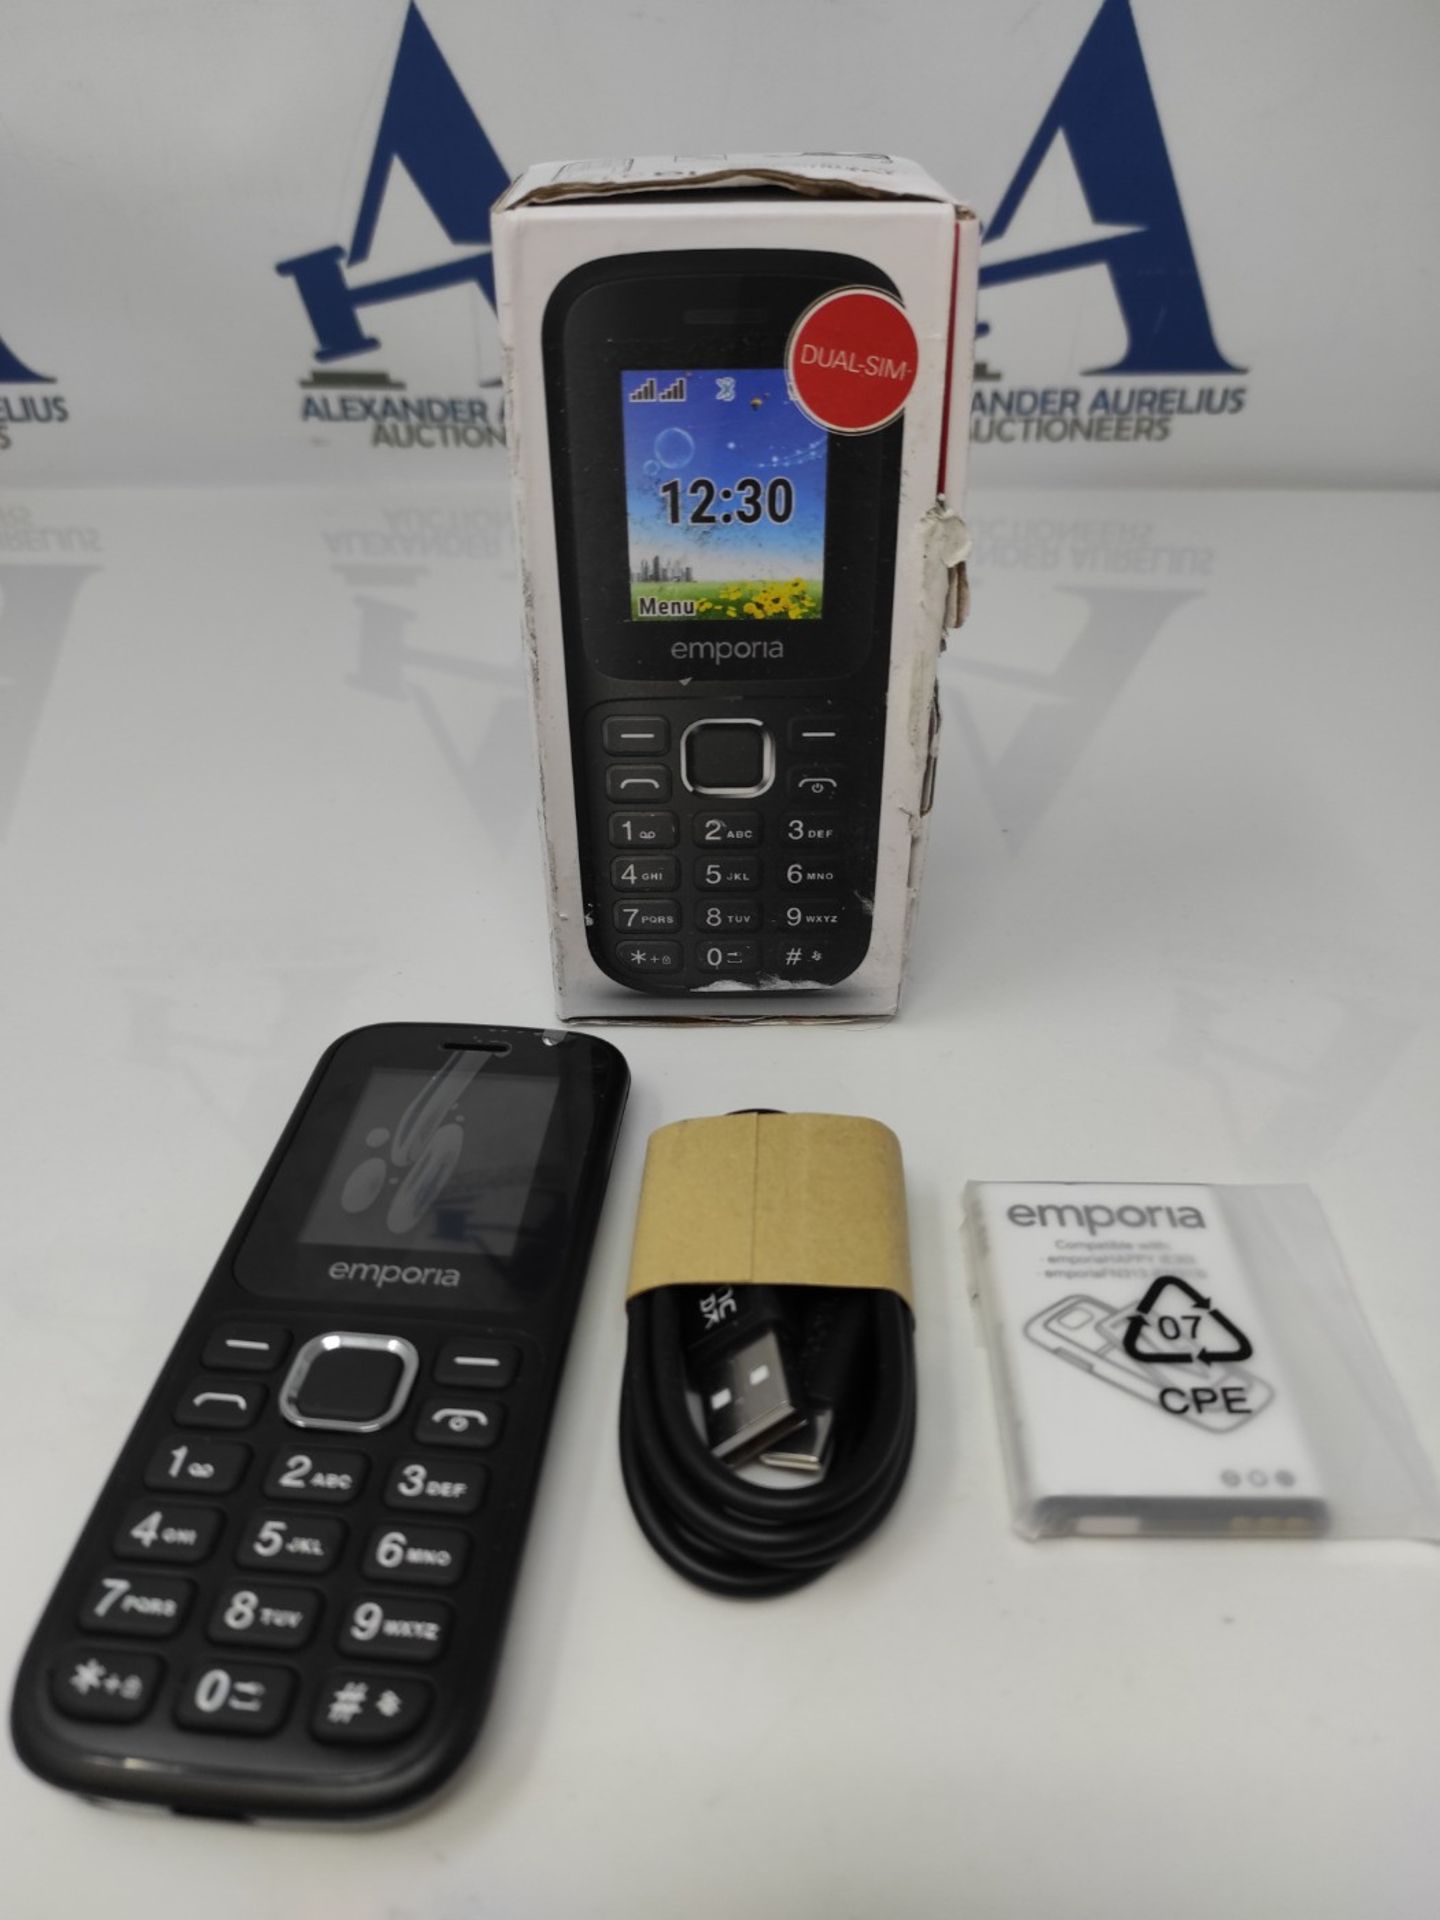 emporiaFN313, 2G mobile phone, Ideal Festival Phone, Dual SIM, 1.77 inch colour displa - Image 2 of 2